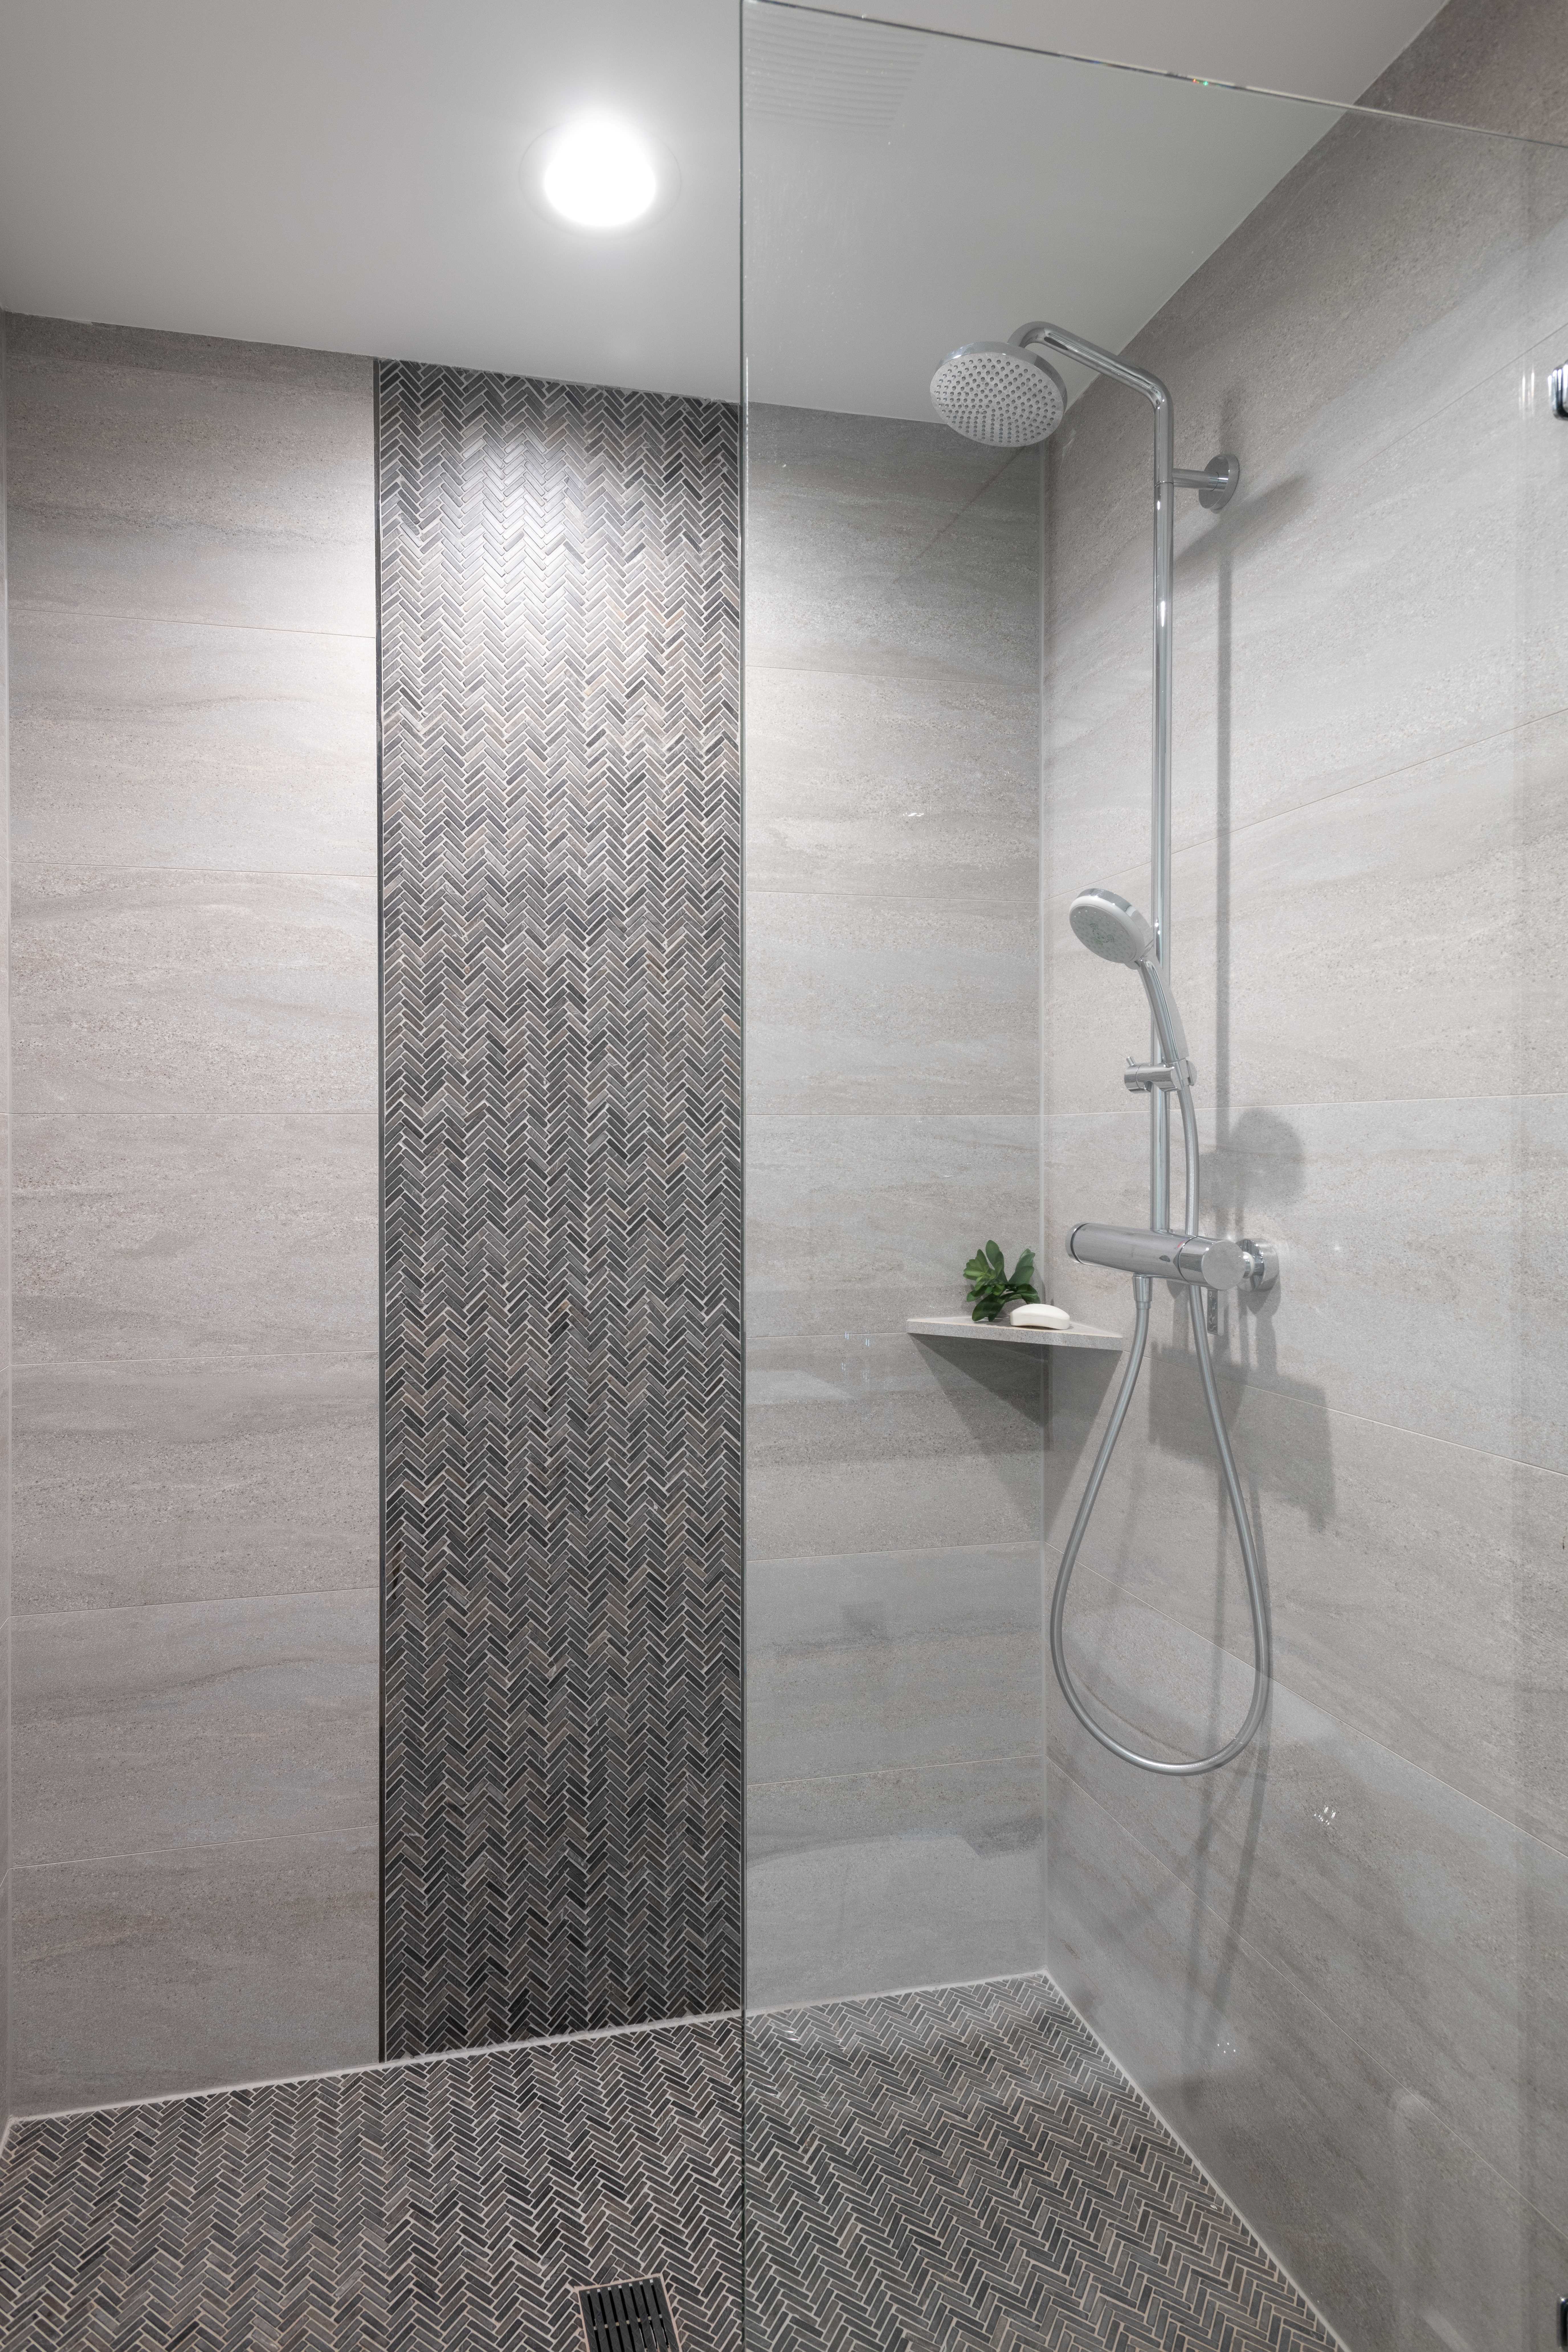 tiled showers